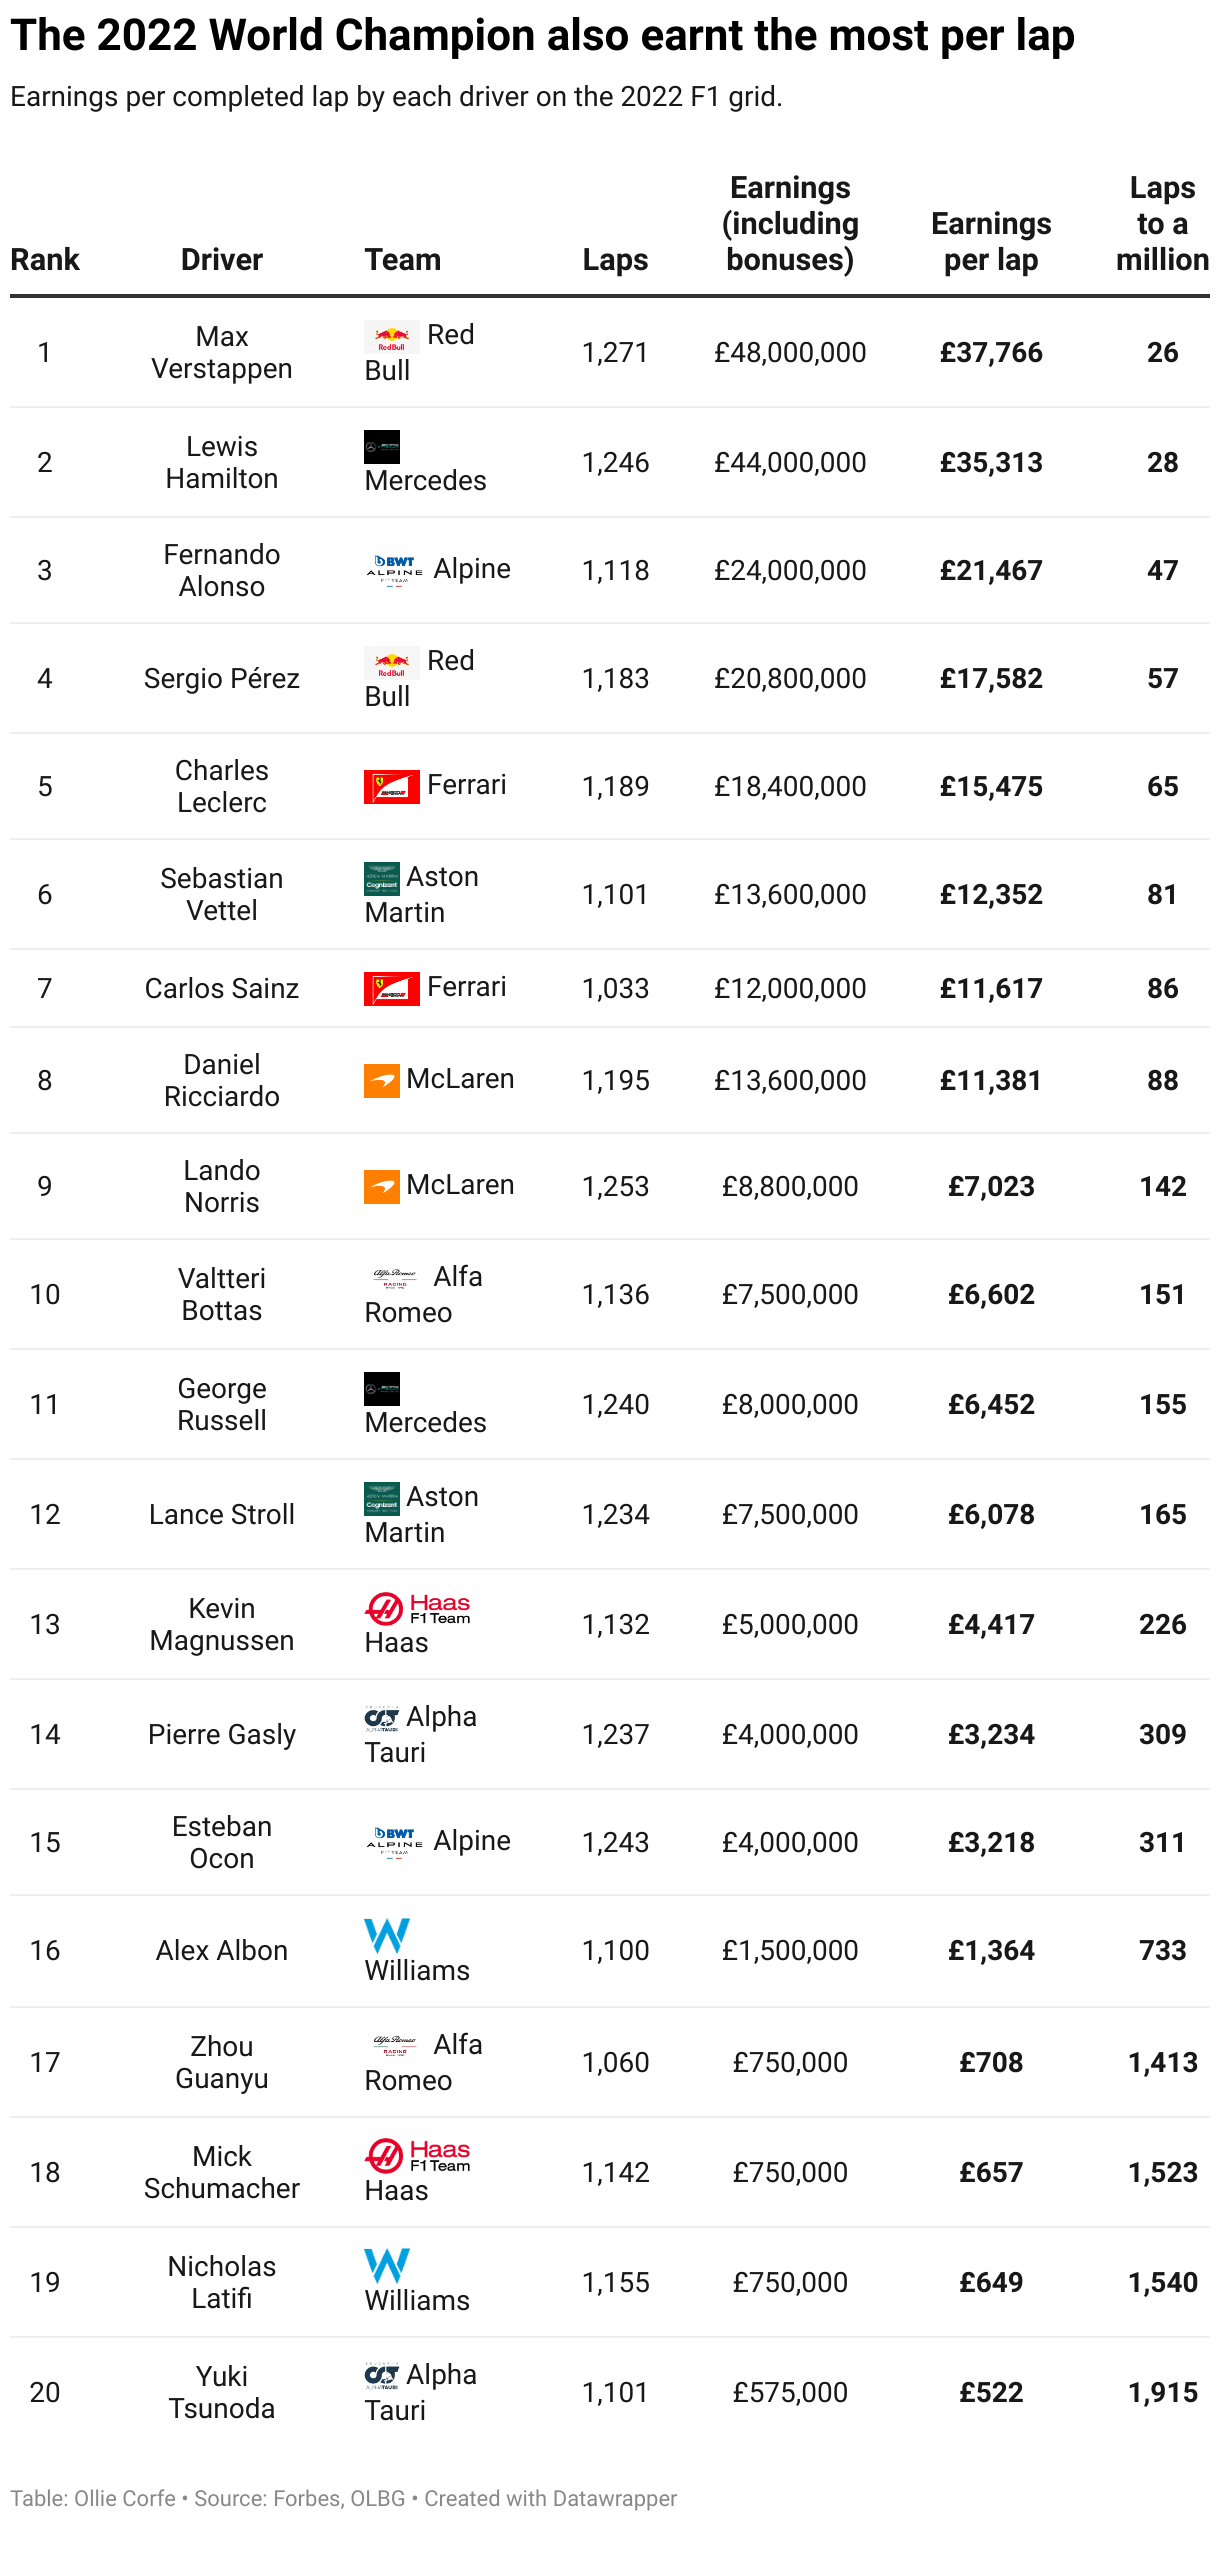 Table of F1 driver earnings per lap.